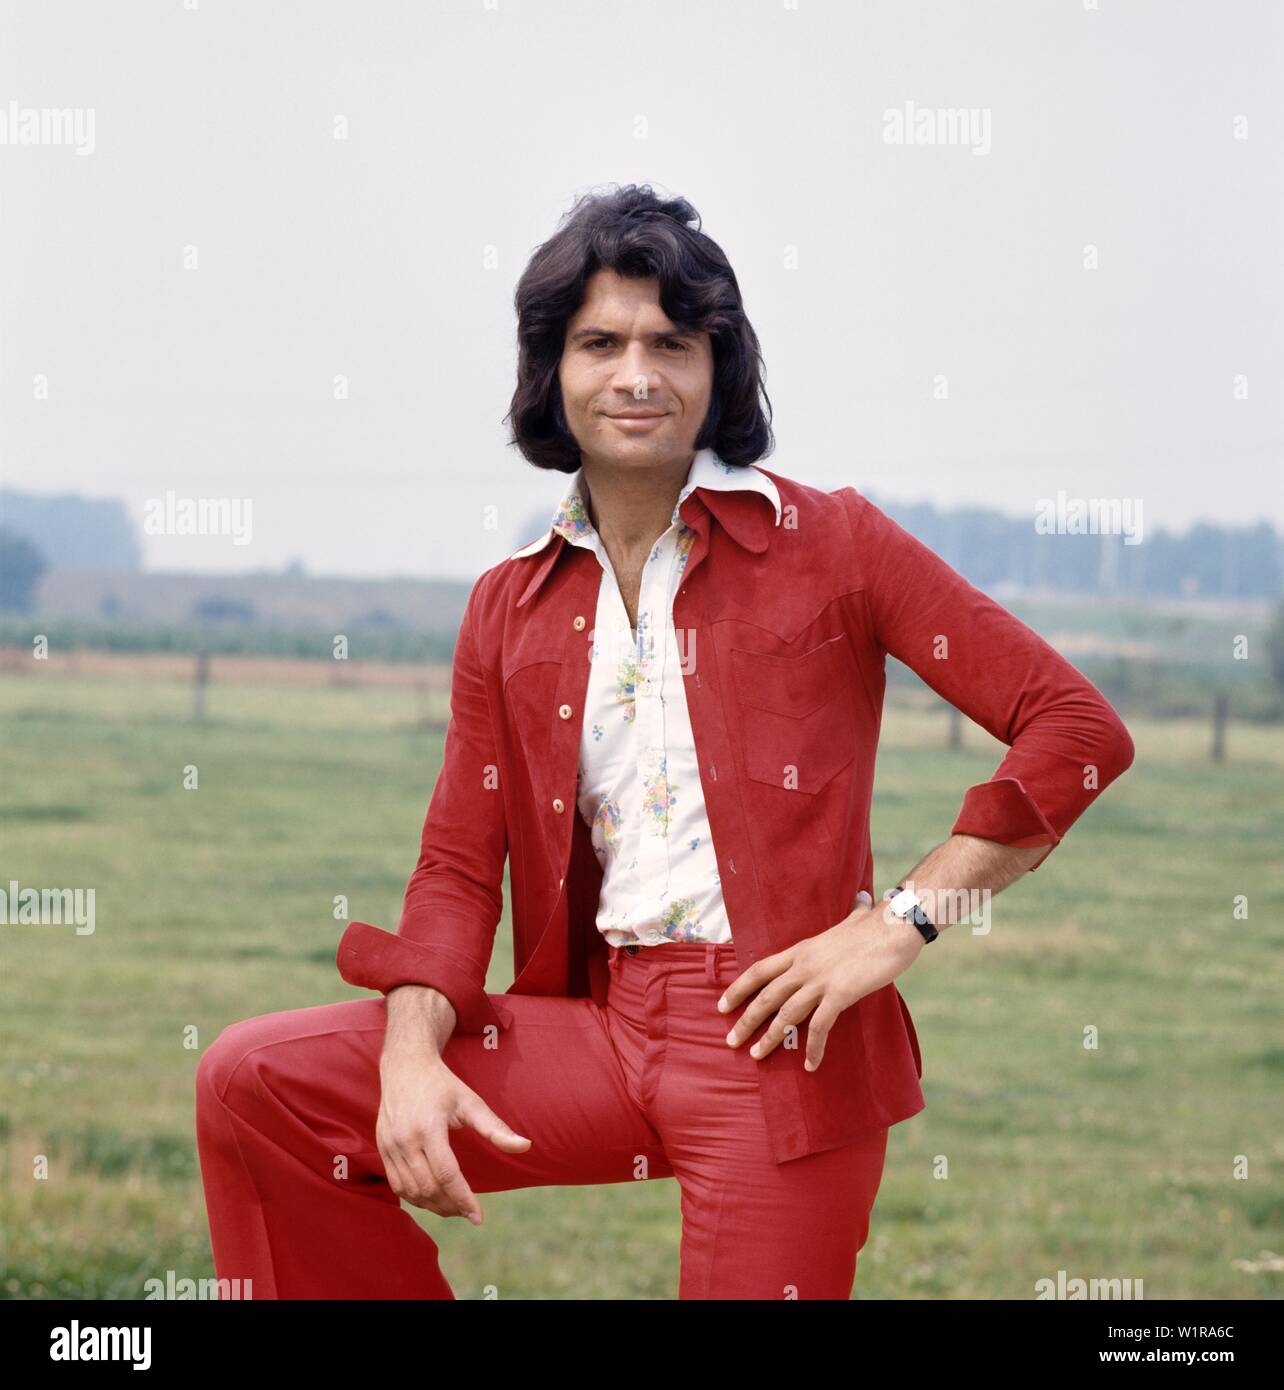 Musiker Costa Cordalis posiert für ein Fotoshooting in einem Feld. Musicien Costa Cordalis posant pour un photoshooting dans un champ. Banque D'Images